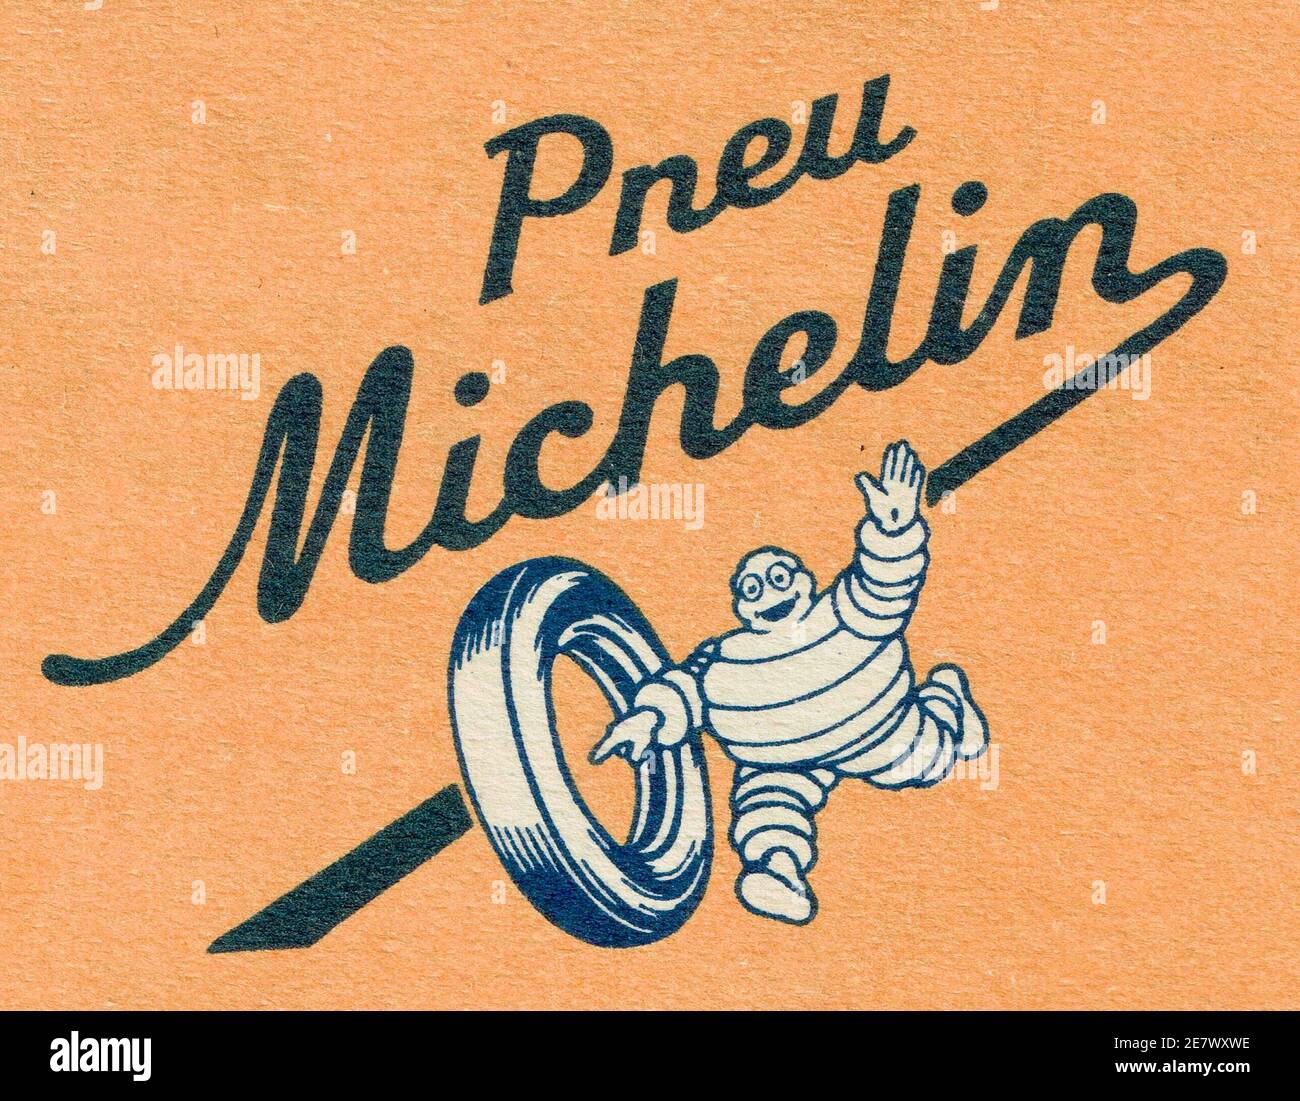 Bibendum, Michelin Tyres company logo, Michelin Maps, France, 40ies Stock  Photo - Alamy